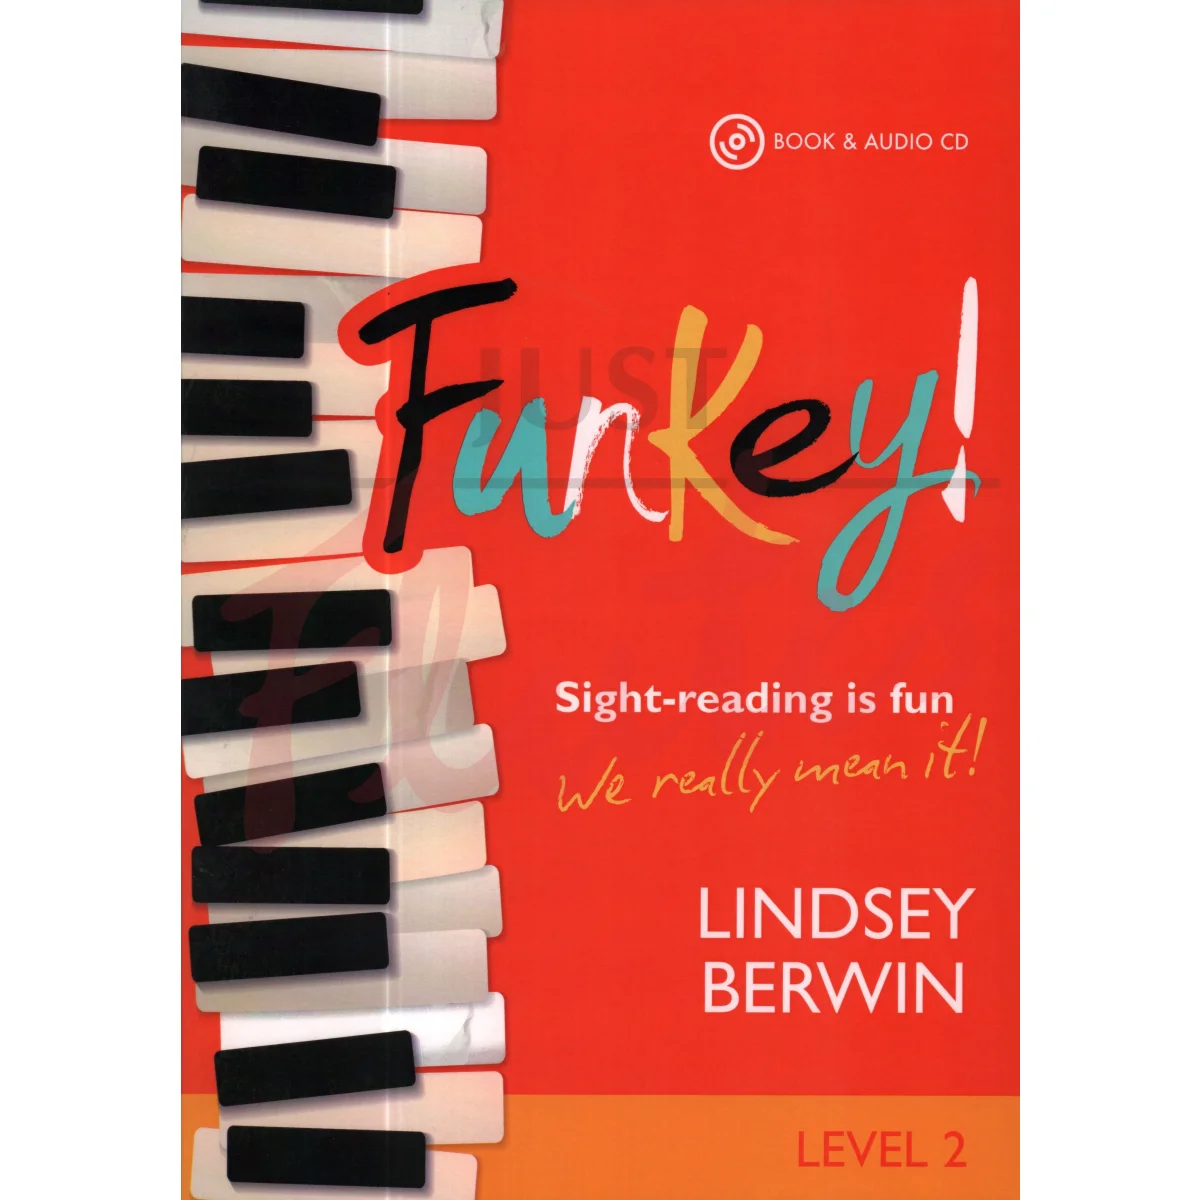 FunKey! - Level 2 for Piano